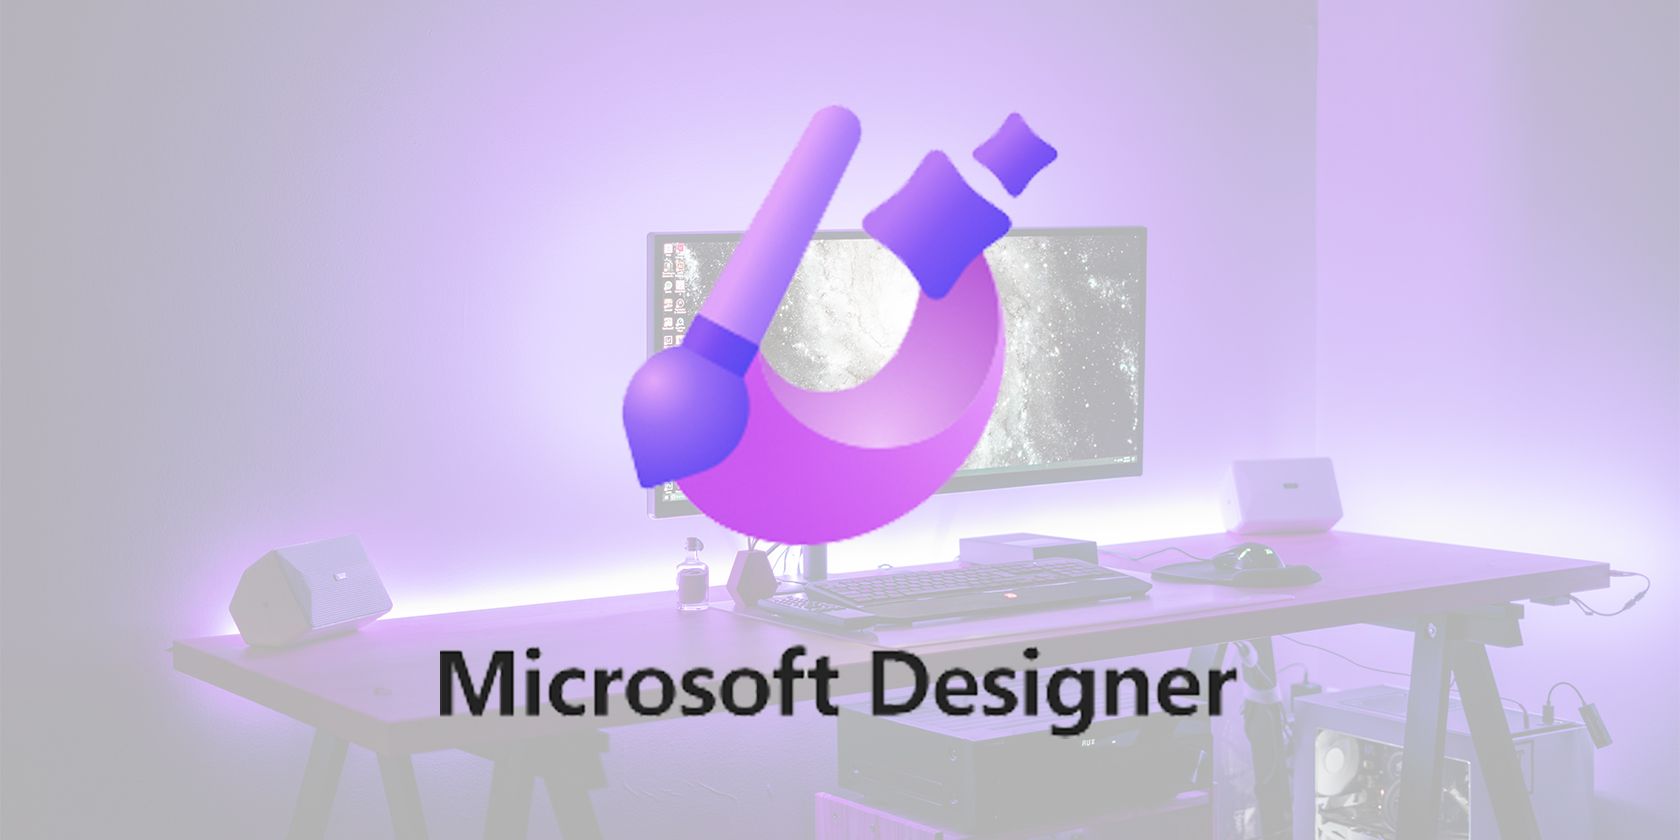 Microsoft Designer logo on background of a computer setup.